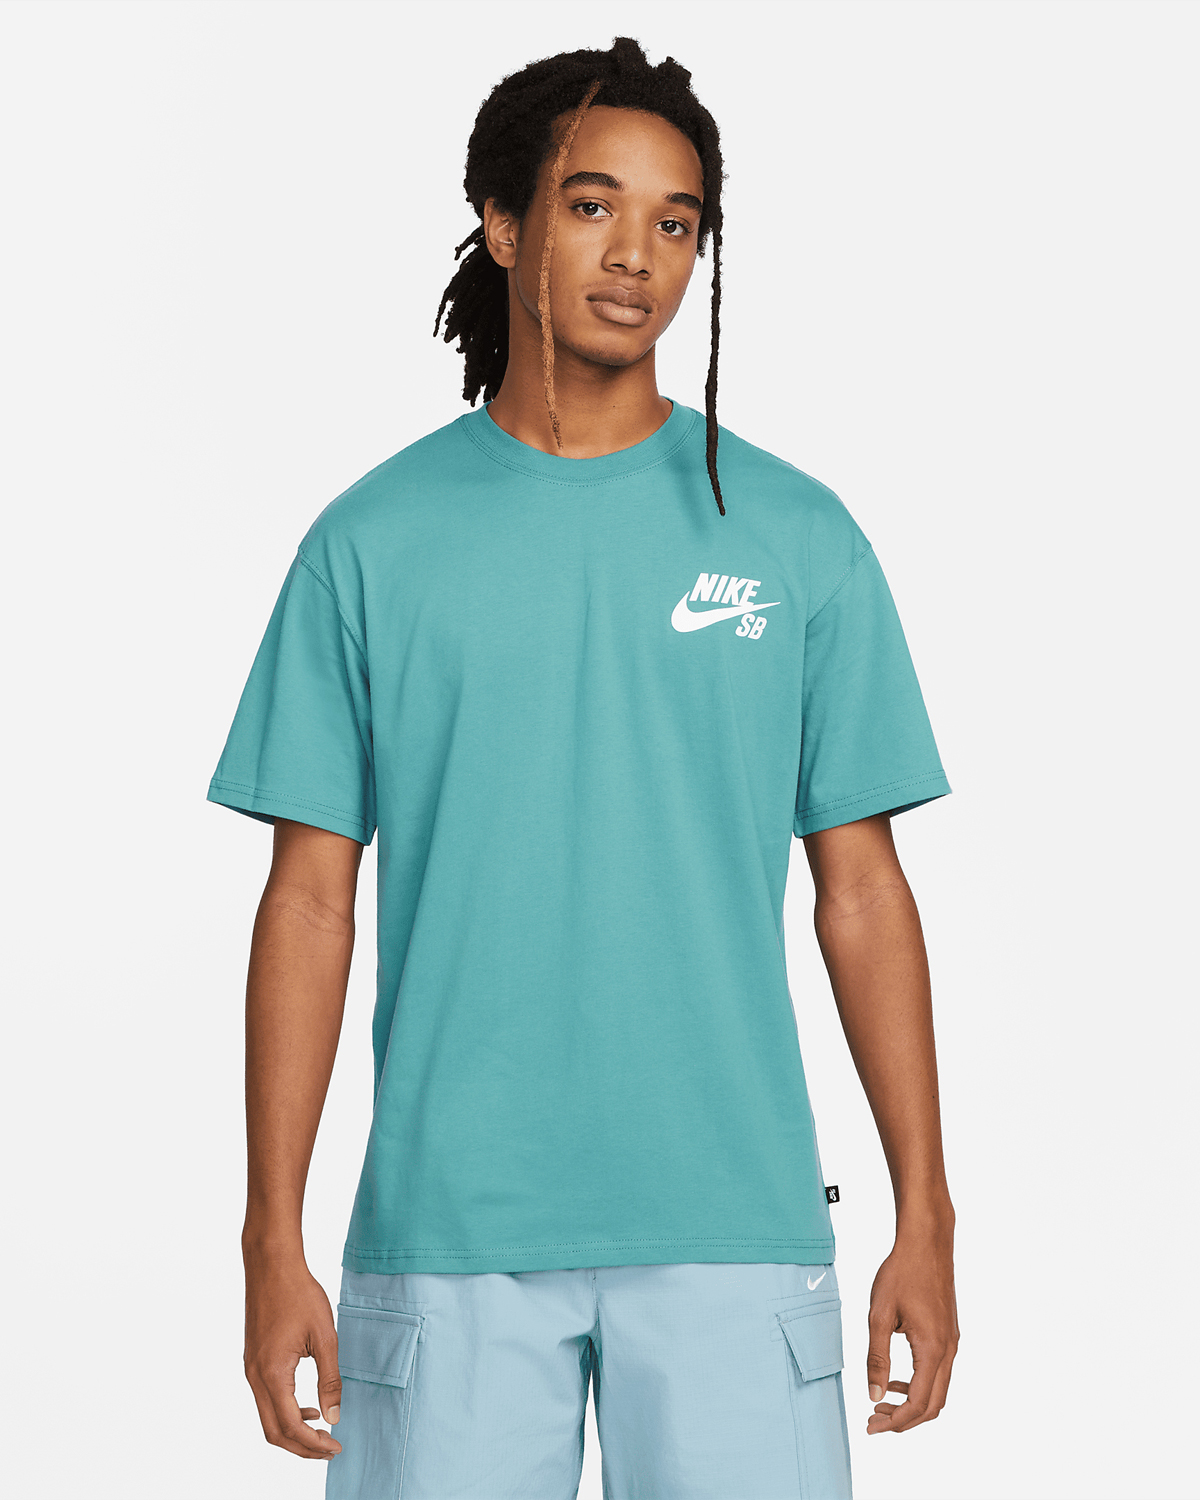 Nike-SB-T-Shirt-Mineral-Teal